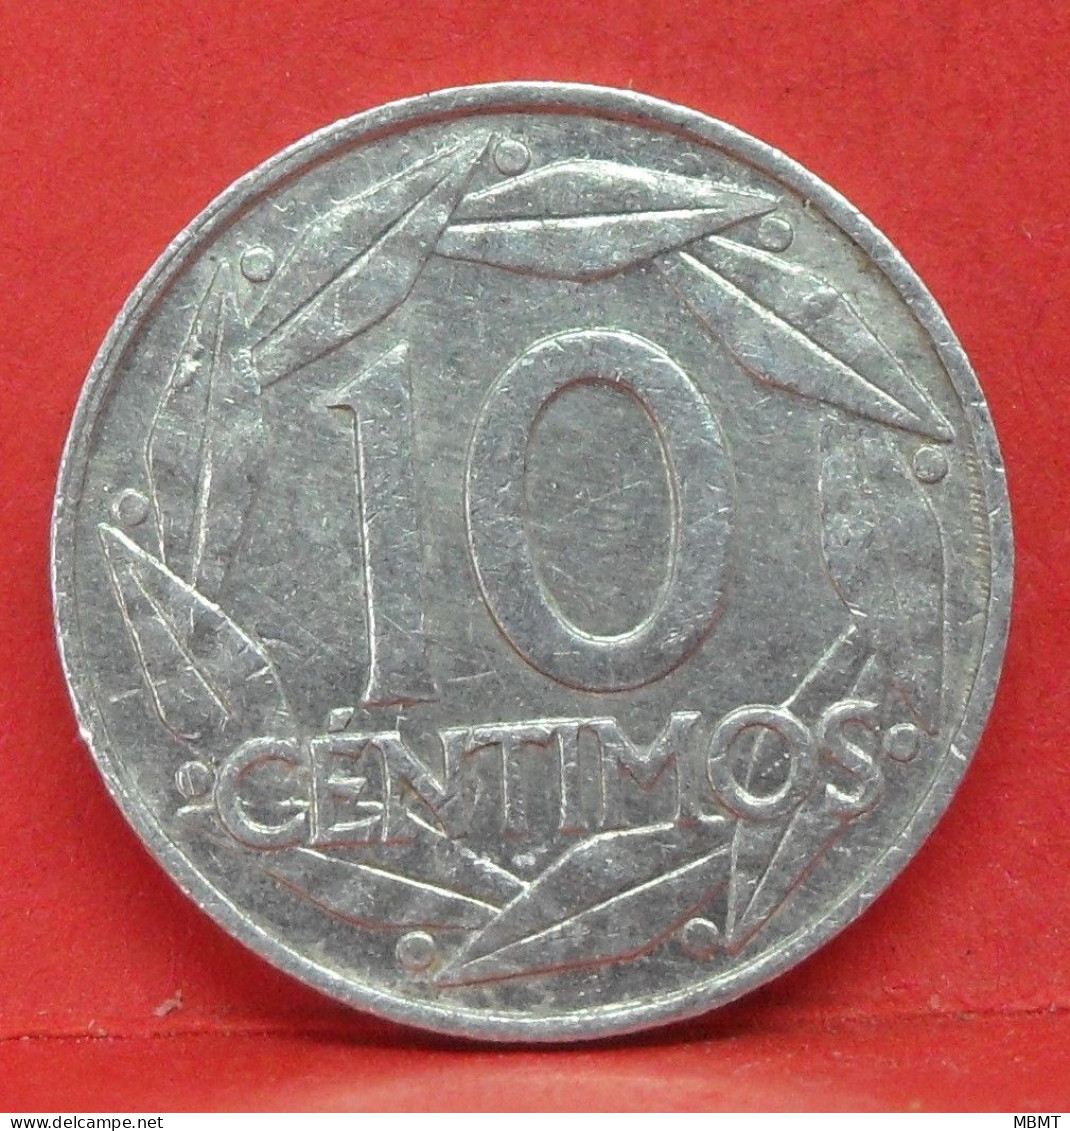 10 Centimos 1959 - TTB - Pièce Monnaie Espagne - Article N°2208 - 10 Centimos